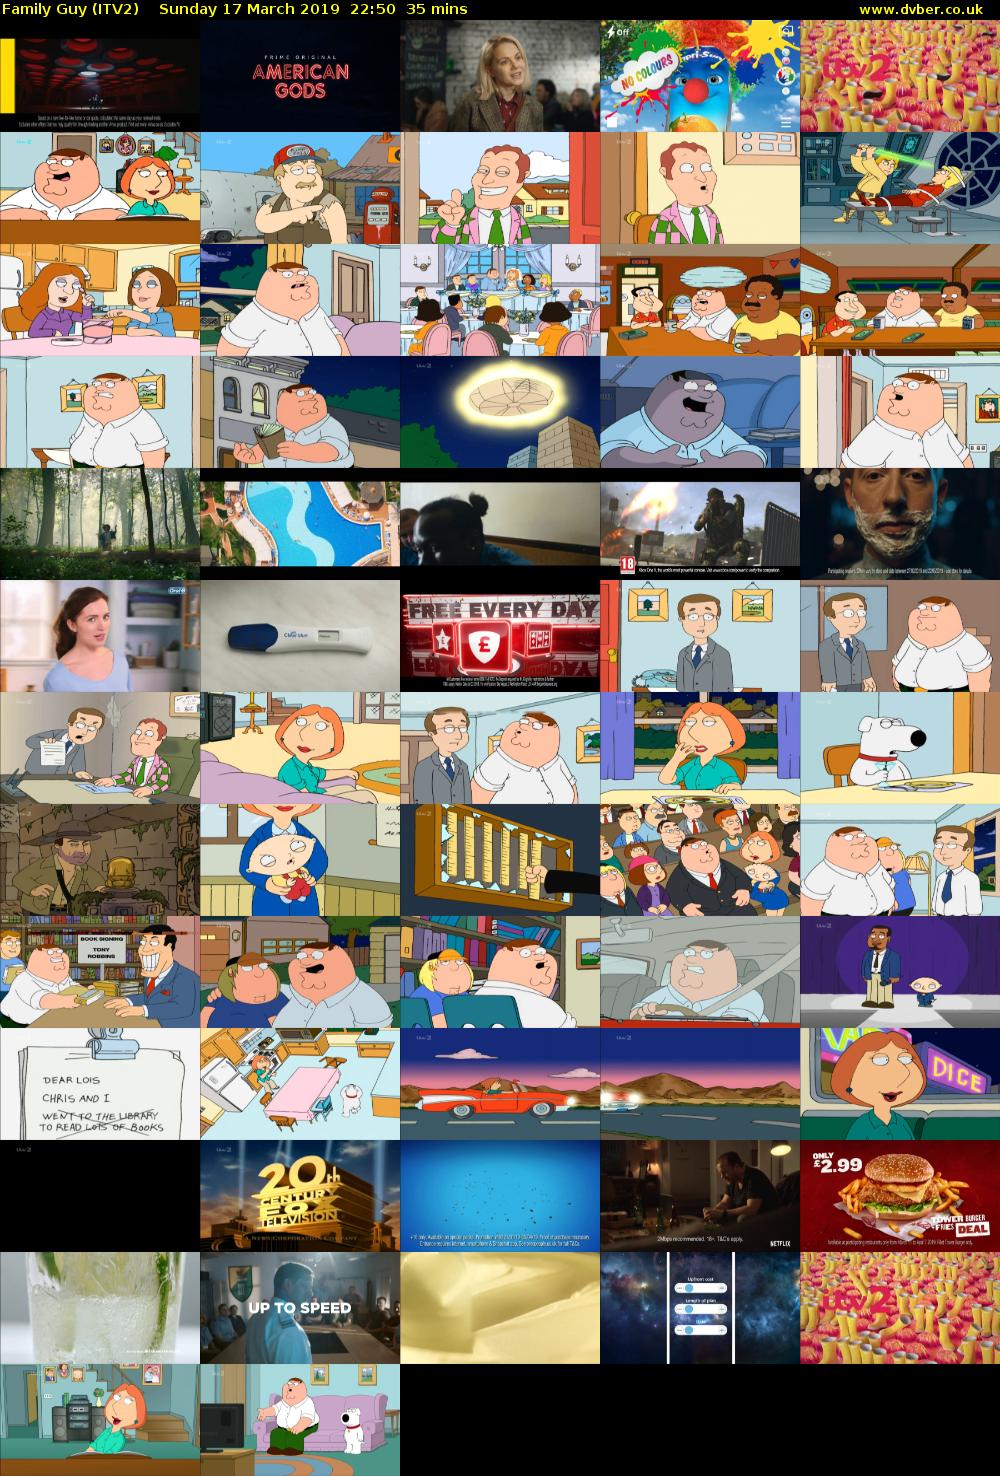 Family Guy (ITV2) Sunday 17 March 2019 22:50 - 23:25